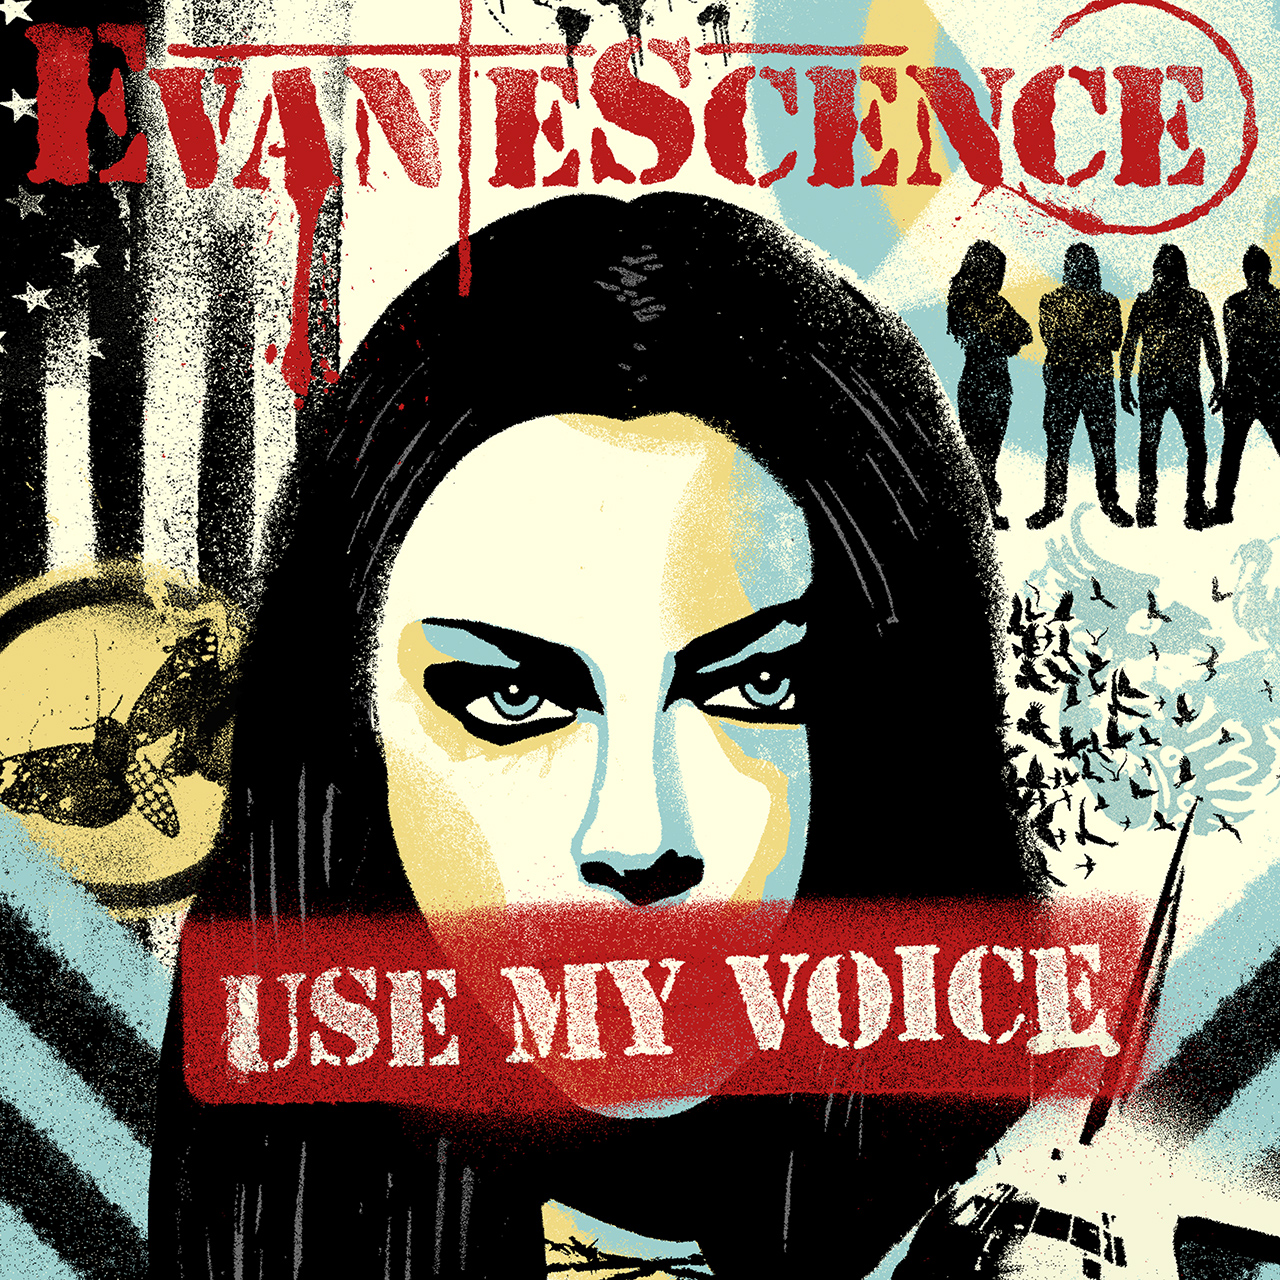 evanescence full album evanescence